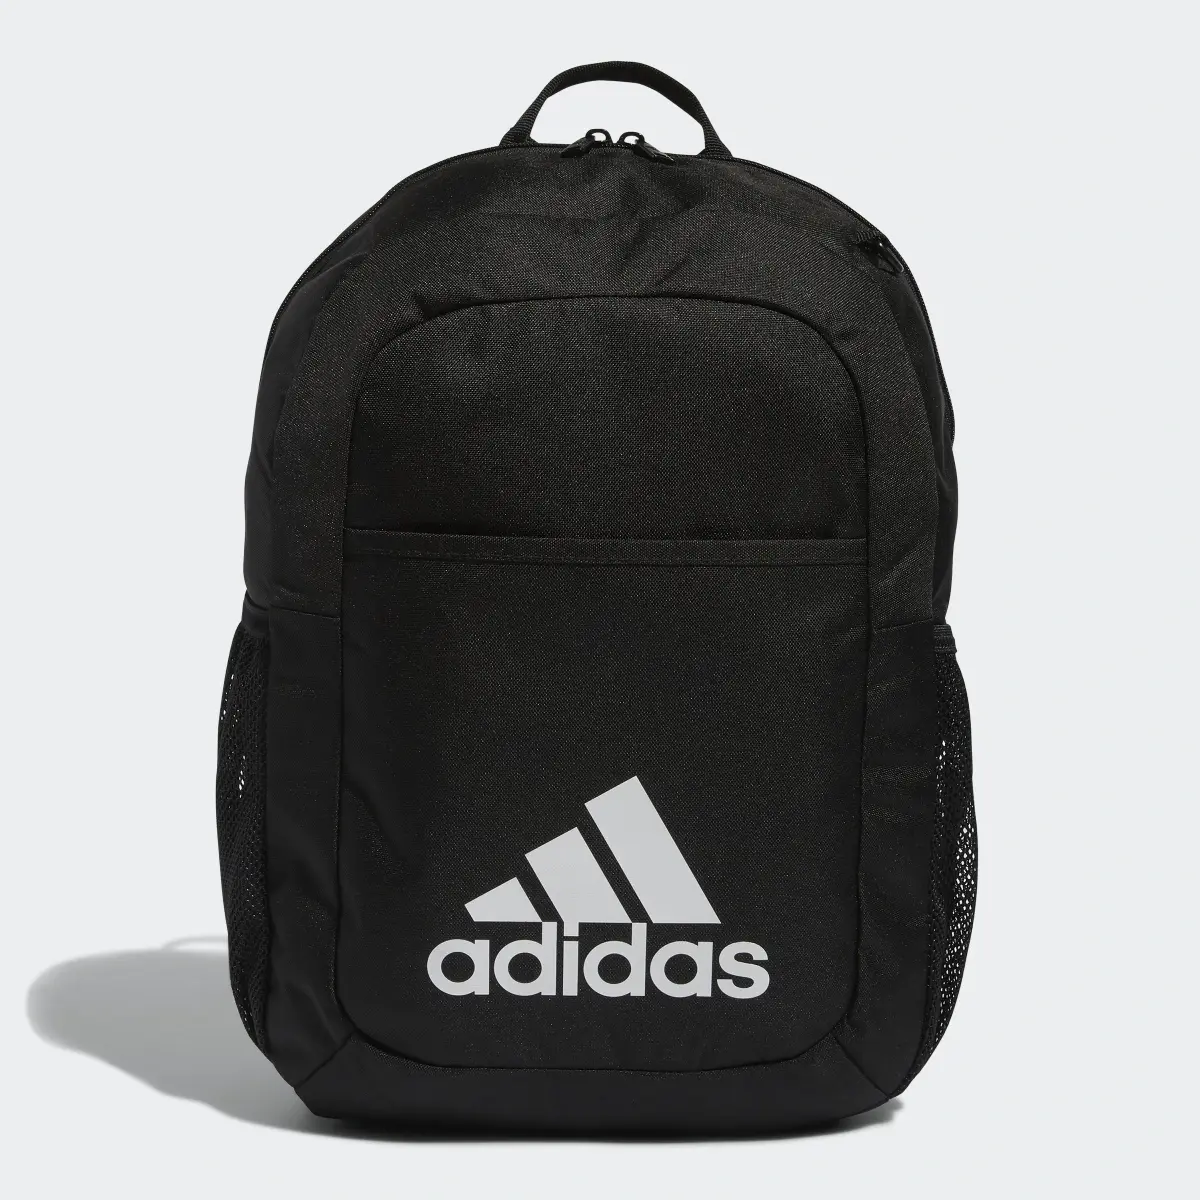 Adidas Ready Backpack. 2